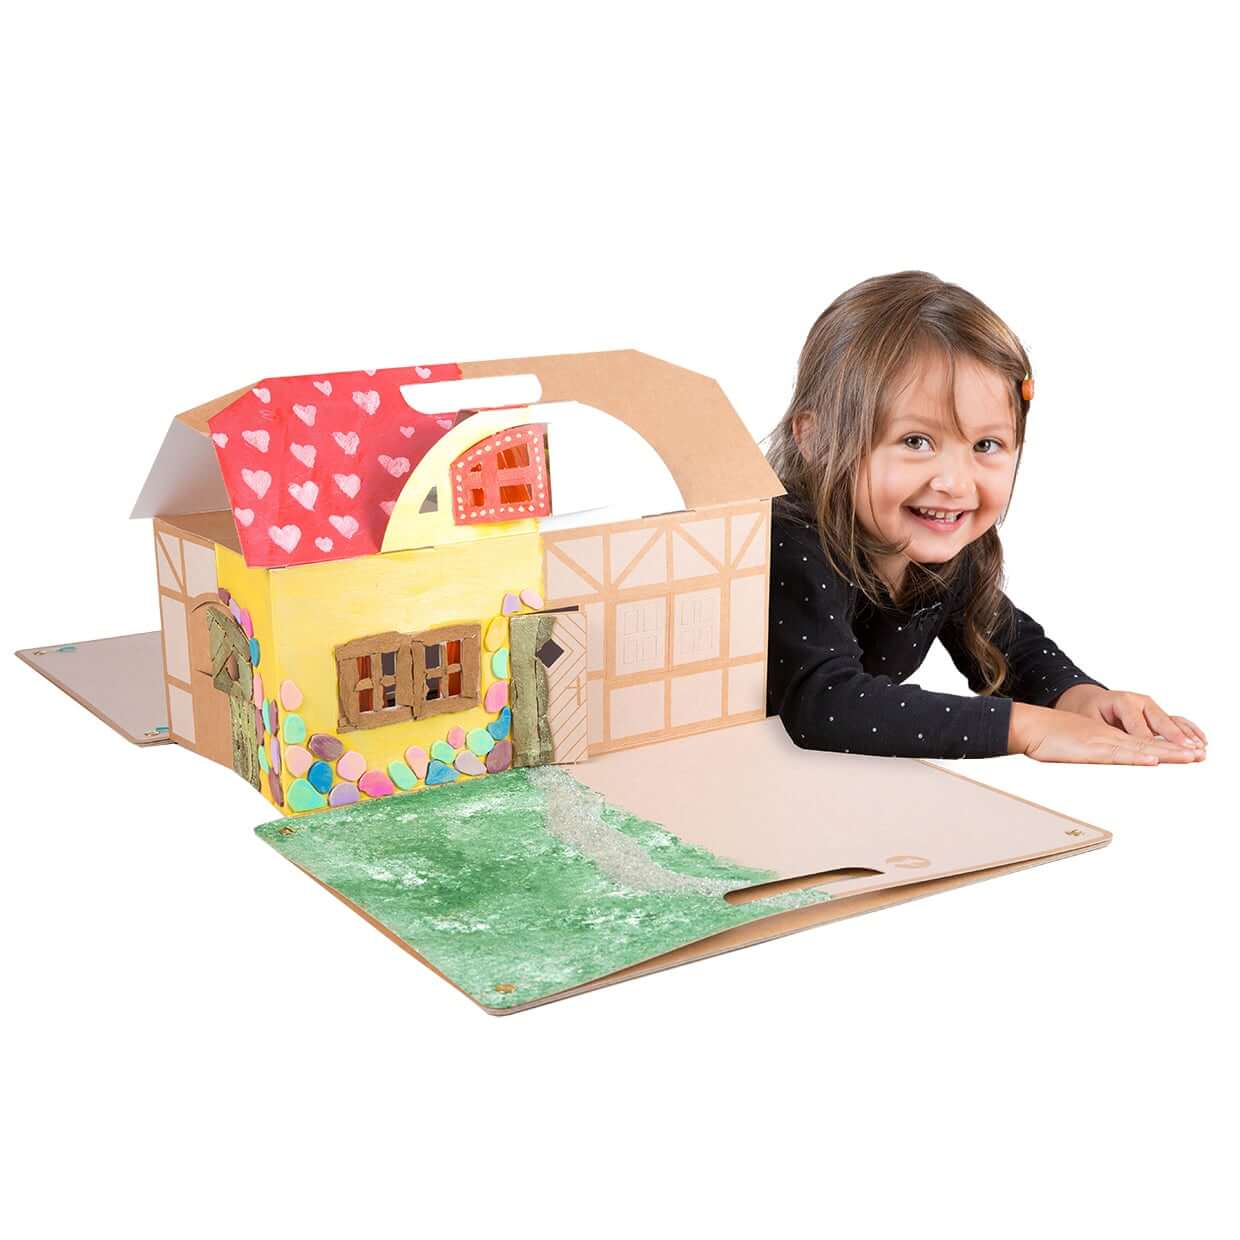 PAPPKA cardboard playhouse